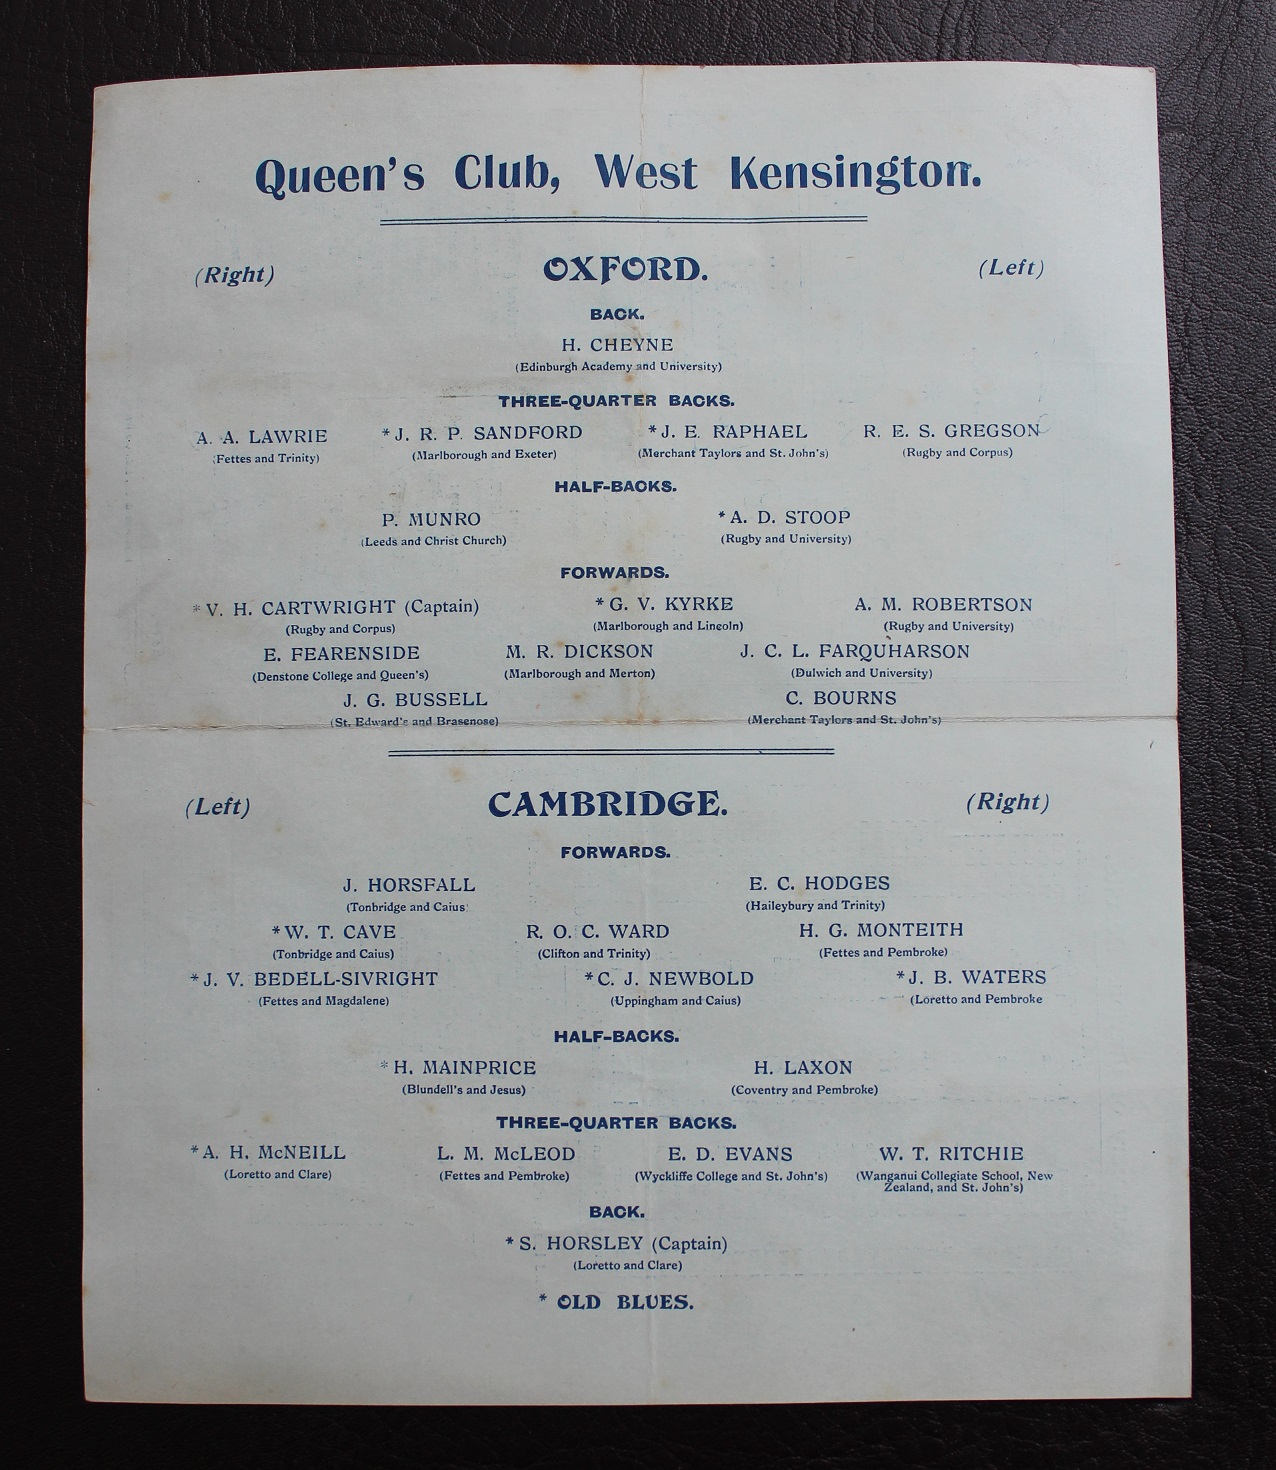 1893 Newport v Cardiff programme (1)